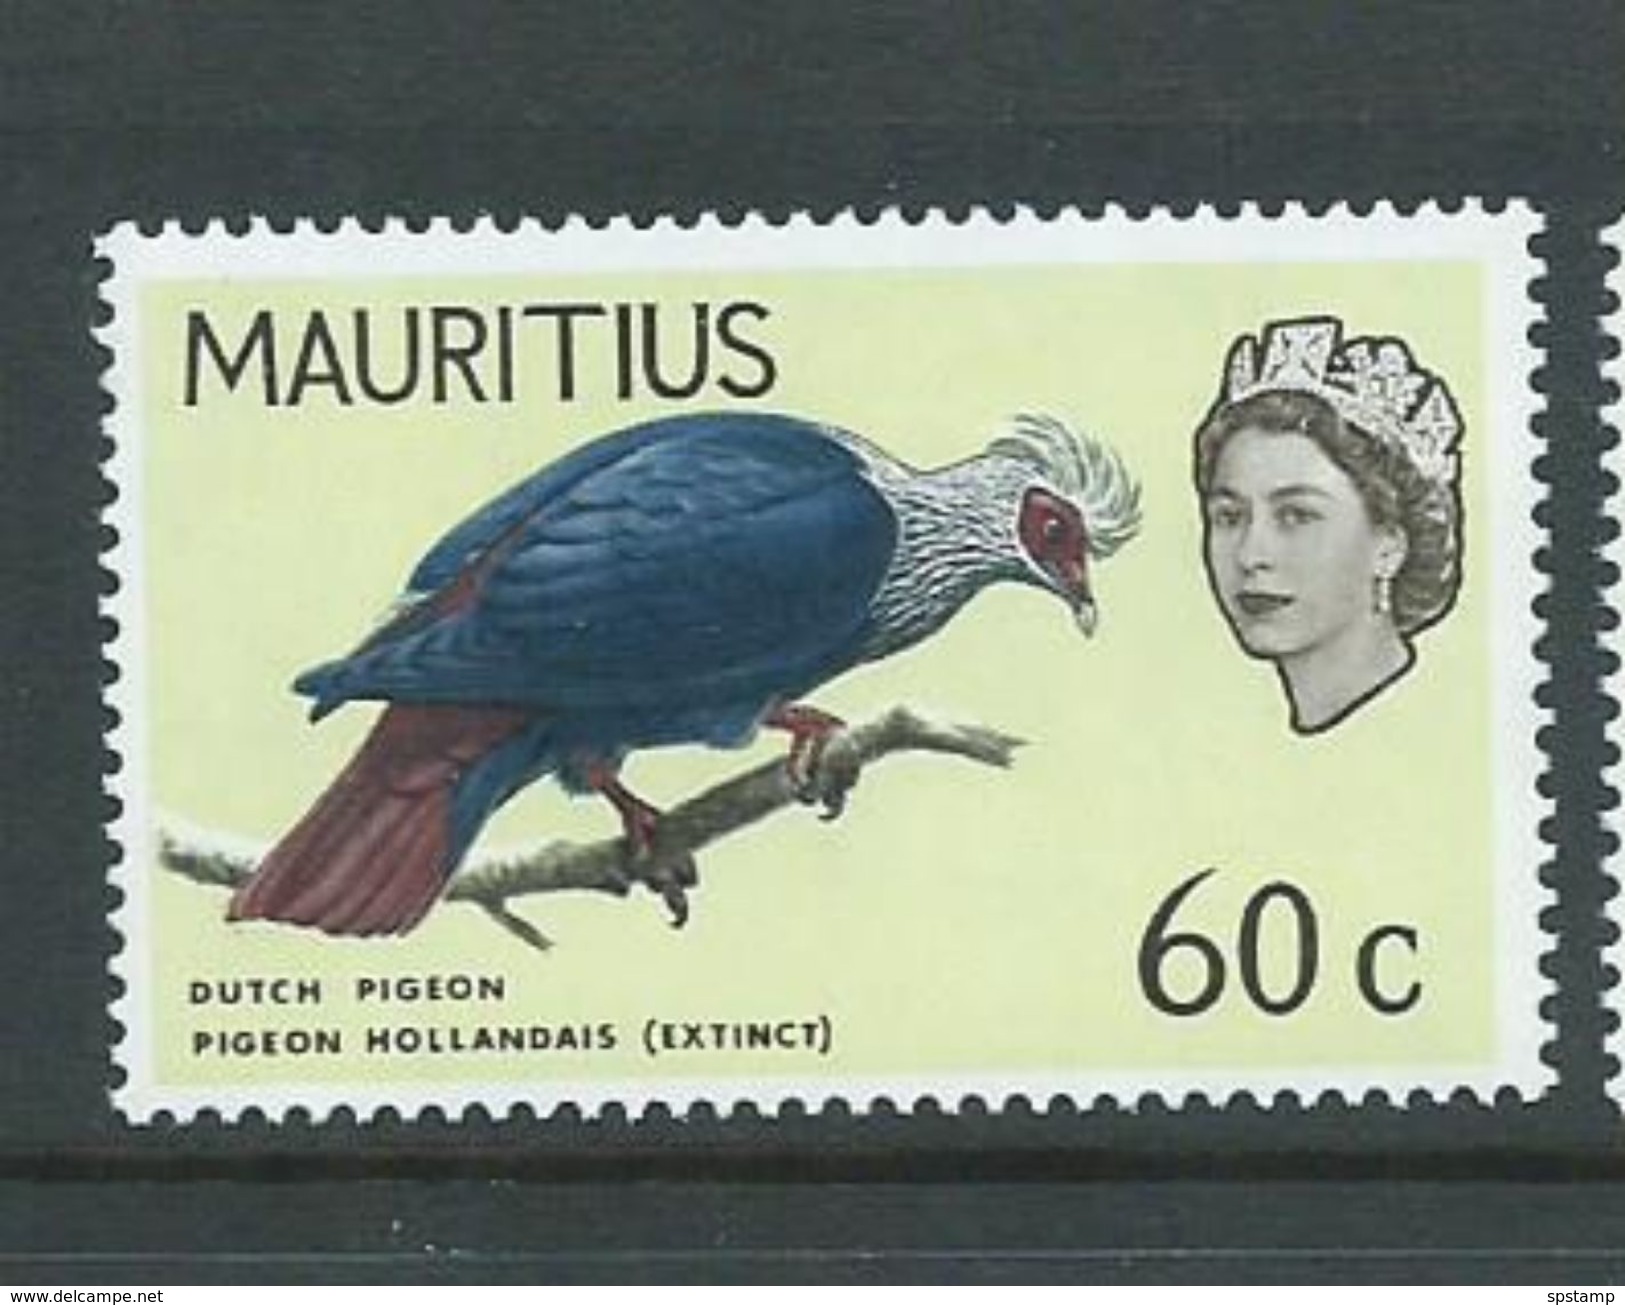 Mauritius 1965 60c Bird Definitive Inverted Watermark MNH - Mauritius (1968-...)